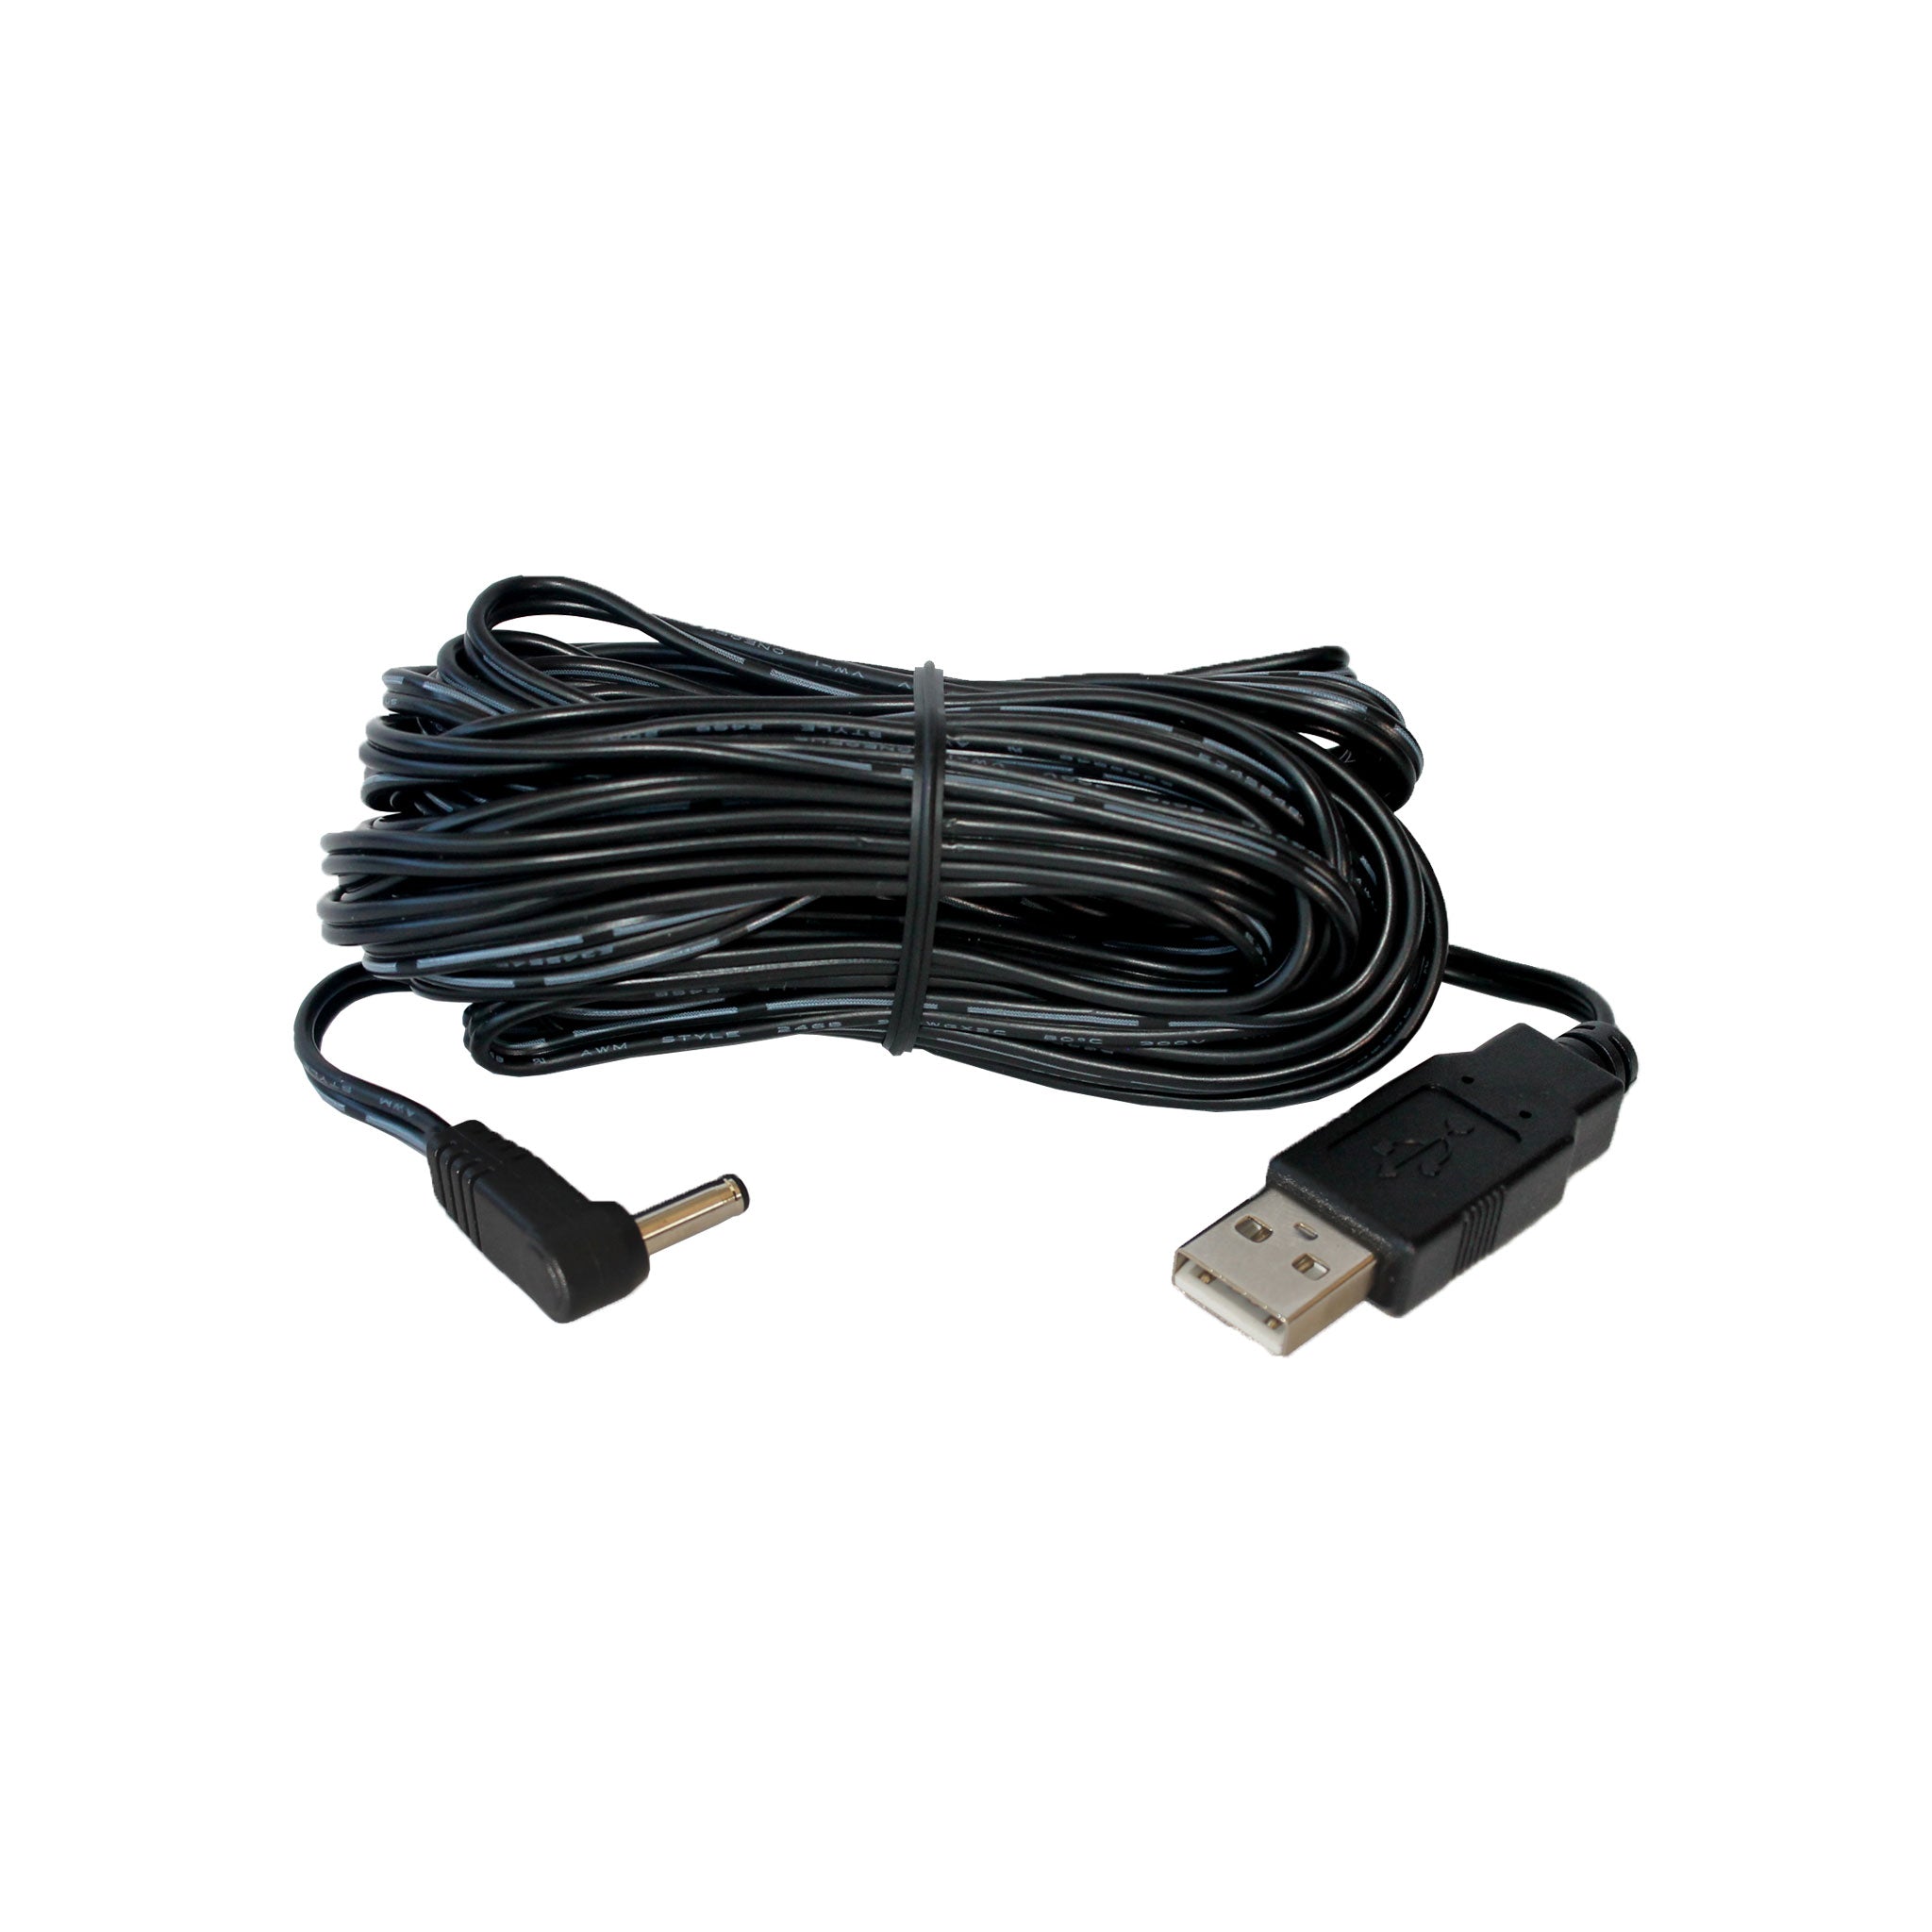 USB Power Cord - 25' (7.5 m) or 6.5' (2 m) - SKU 6628, 6627 — Davis  Instruments